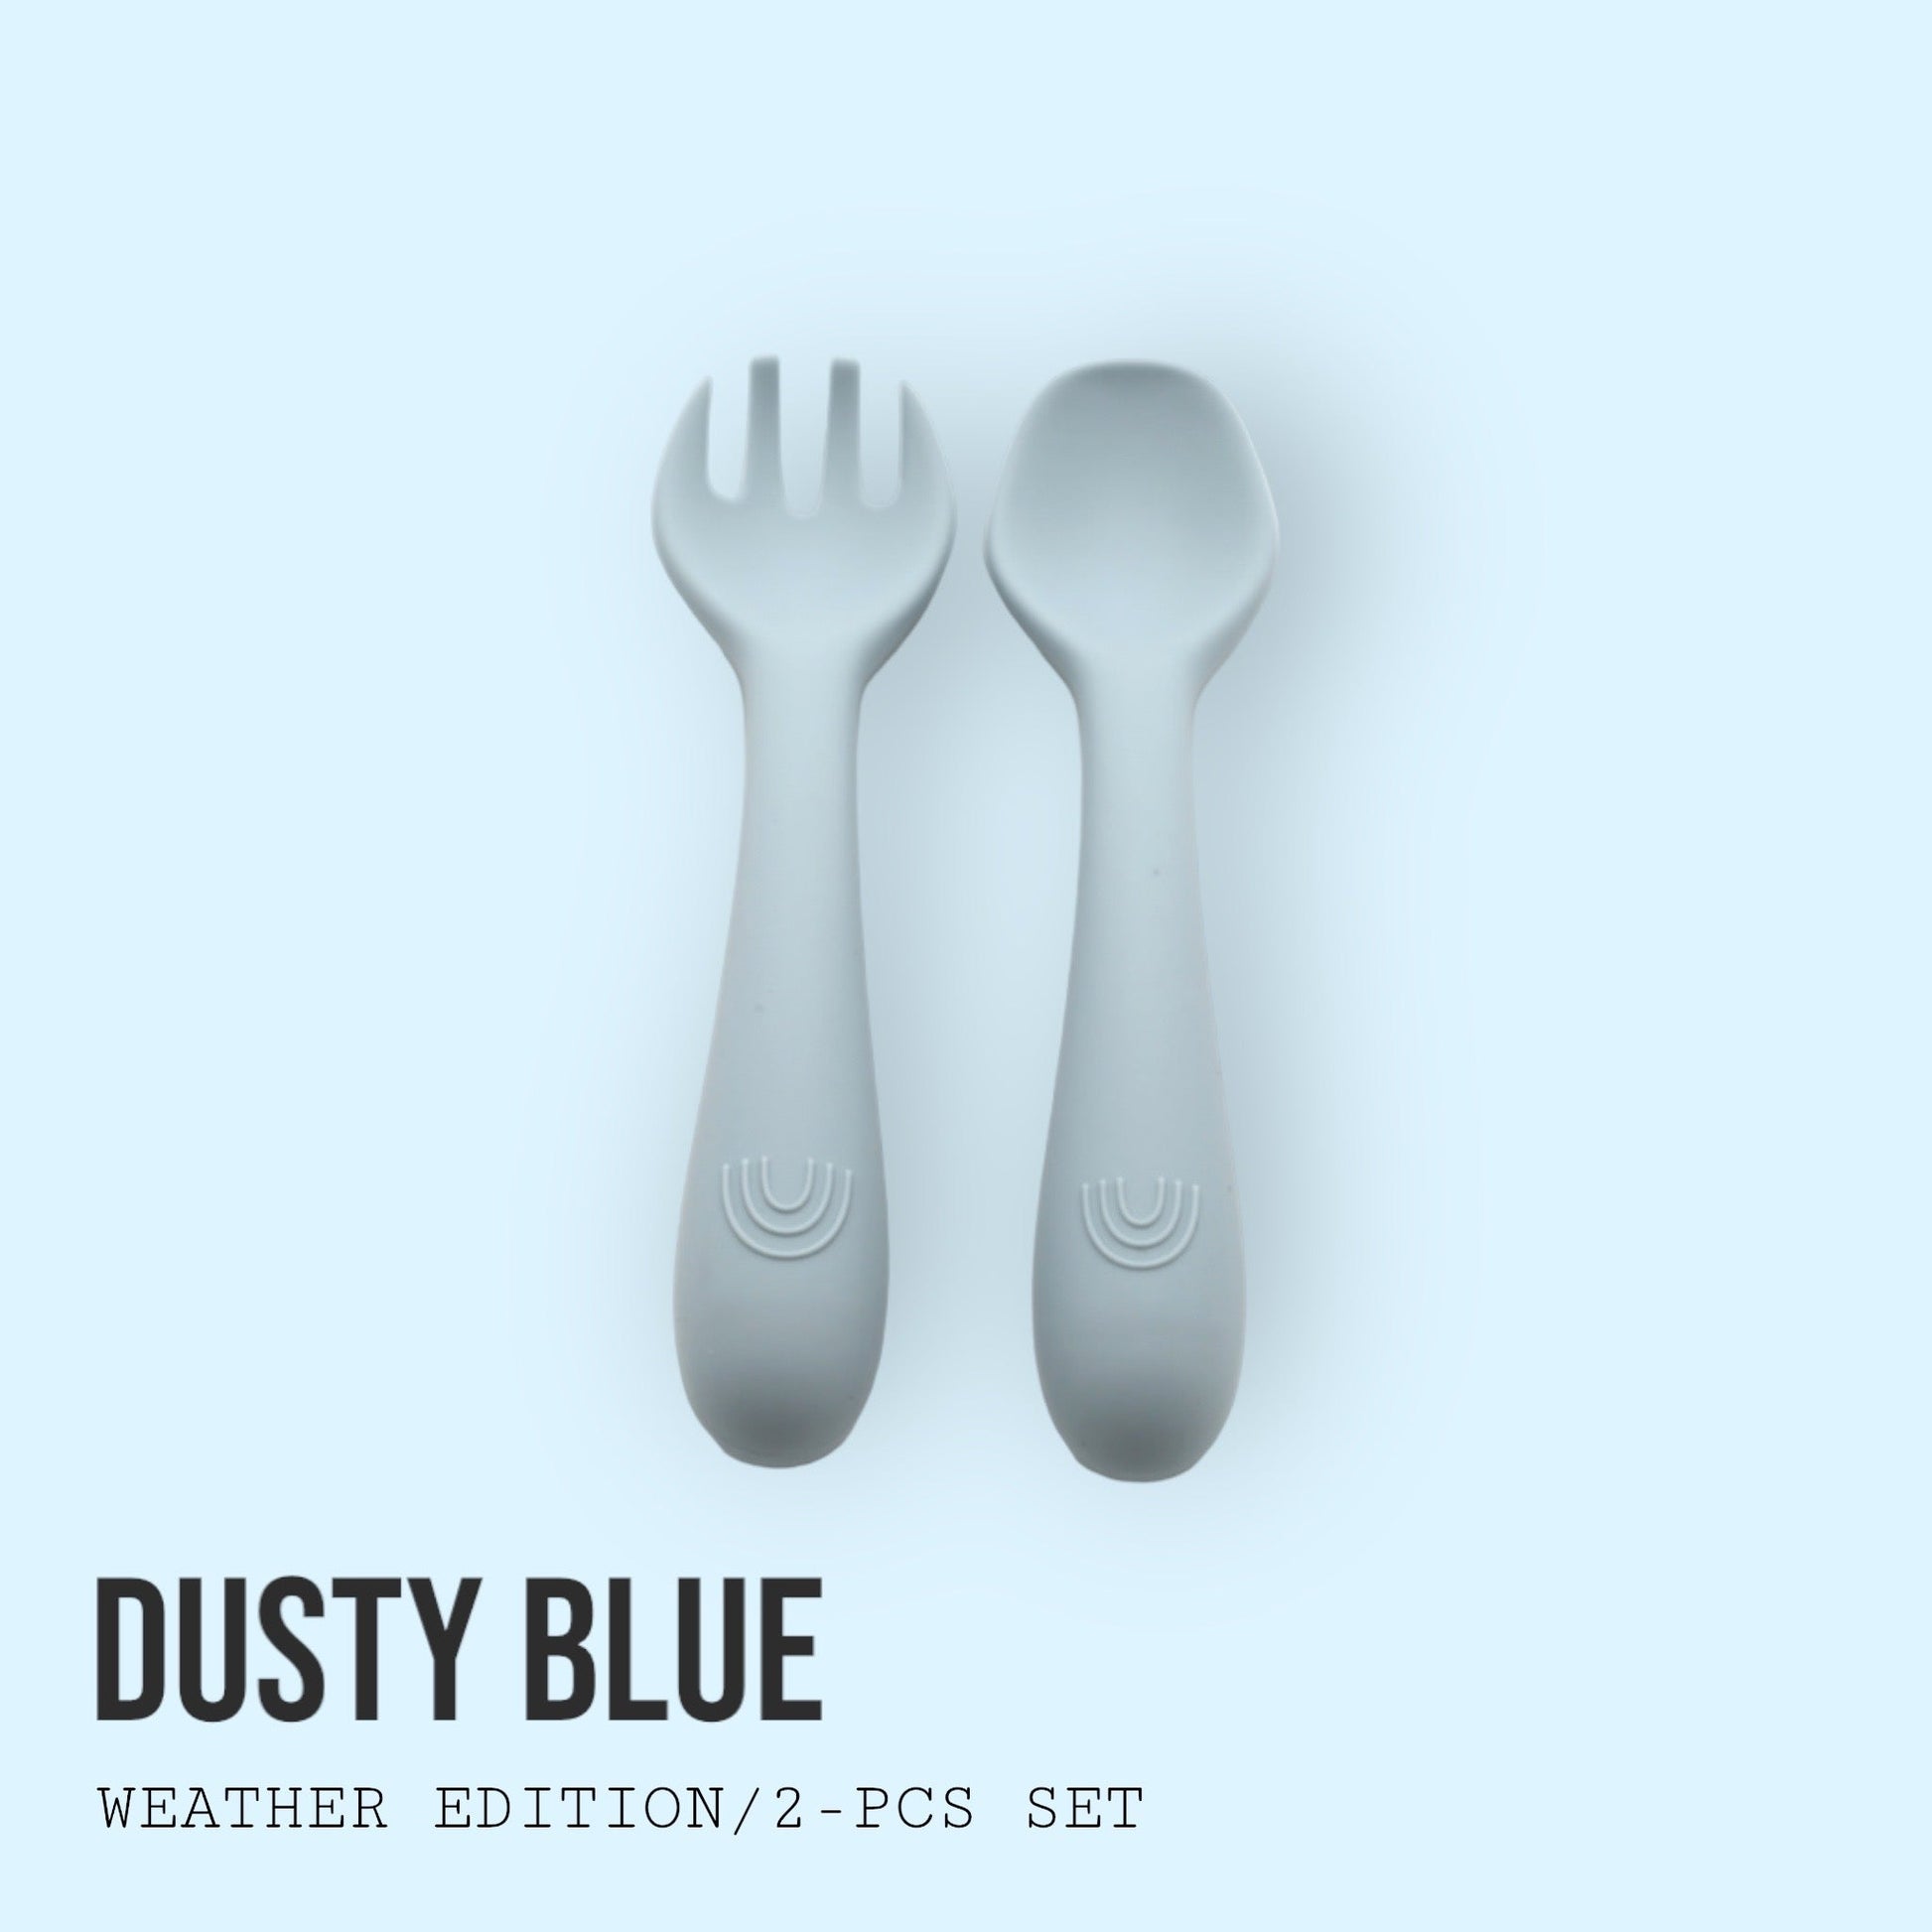 Platinum Silicone Cutlery Set - milktop